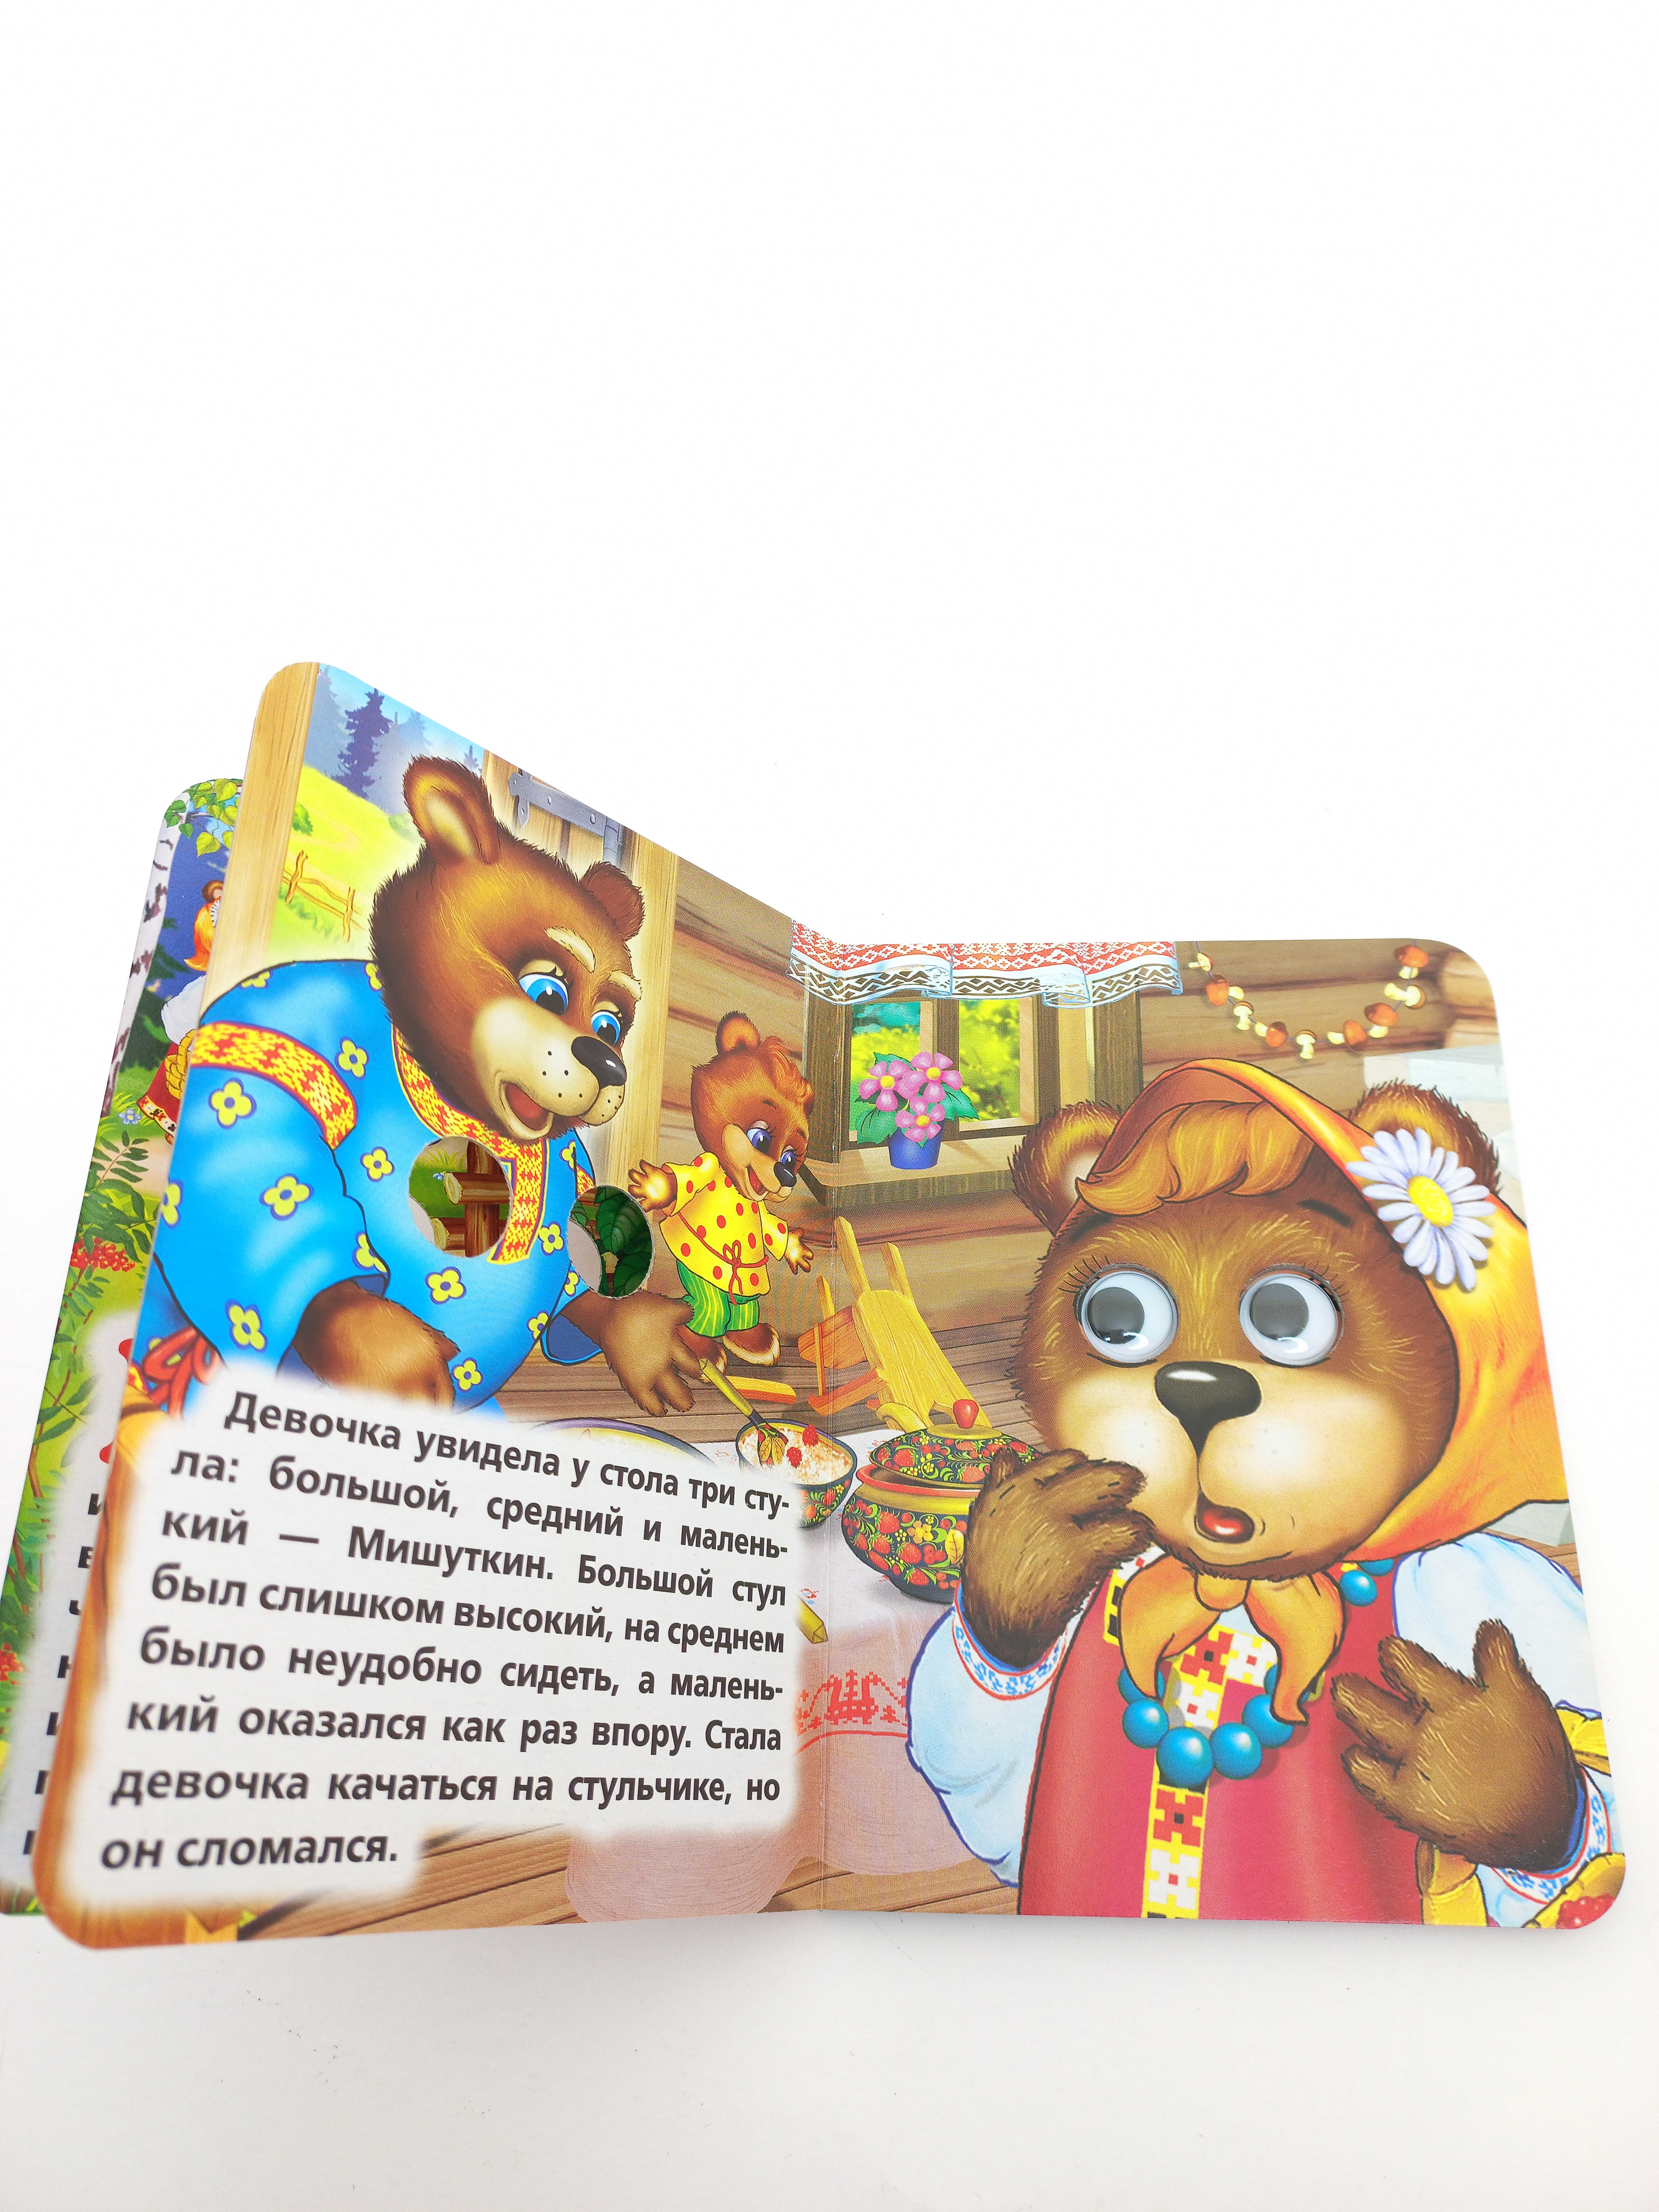 Мишки в книжке. Книга три медведя. Три медведя книга с глазками. Книжка с глазками. Https mishka knizhka